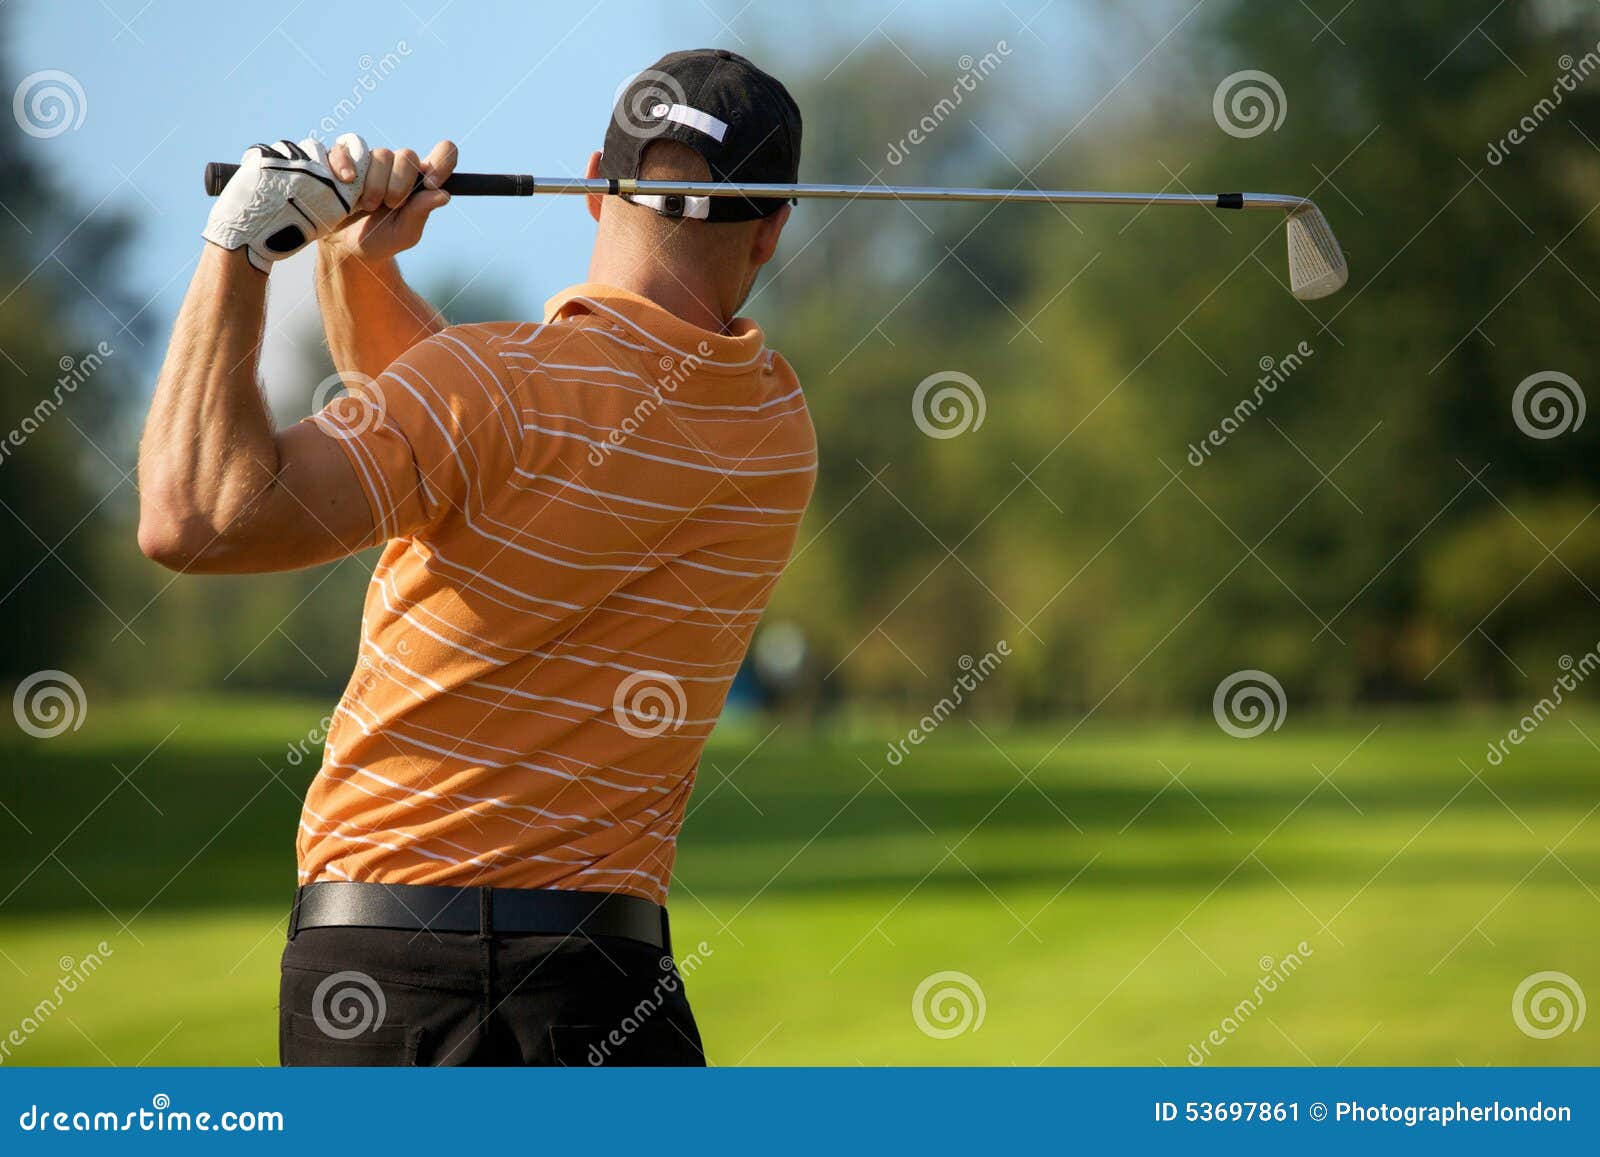 young man swinging golf club, rear view